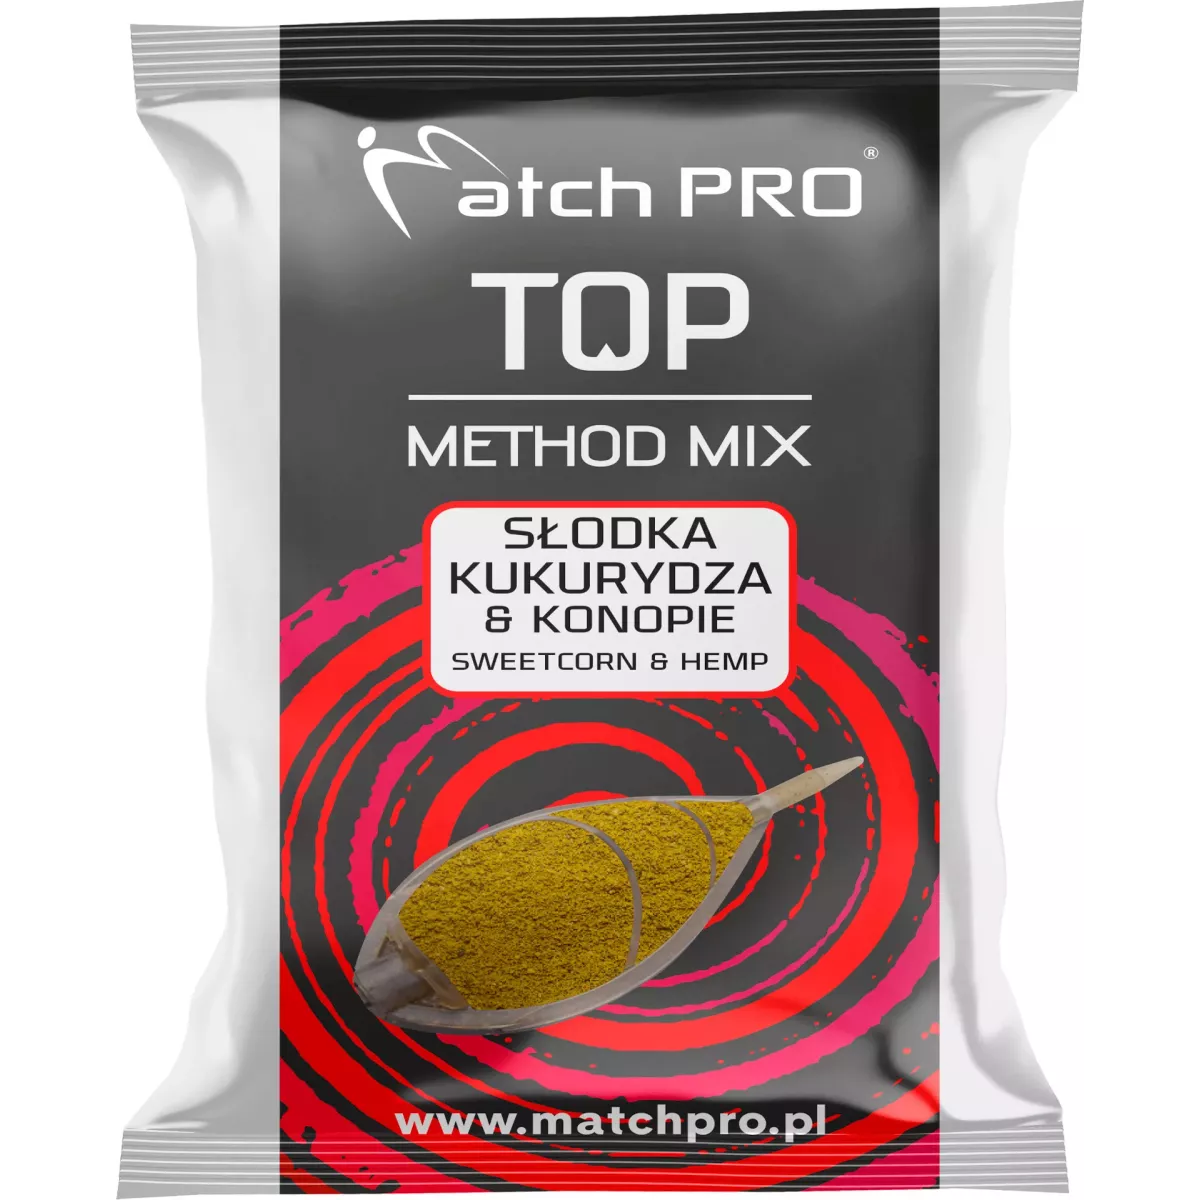 Zanęta MatchPro Method Mix TOP 700g - SŁODKA KUKURYDZA & KONOPIE